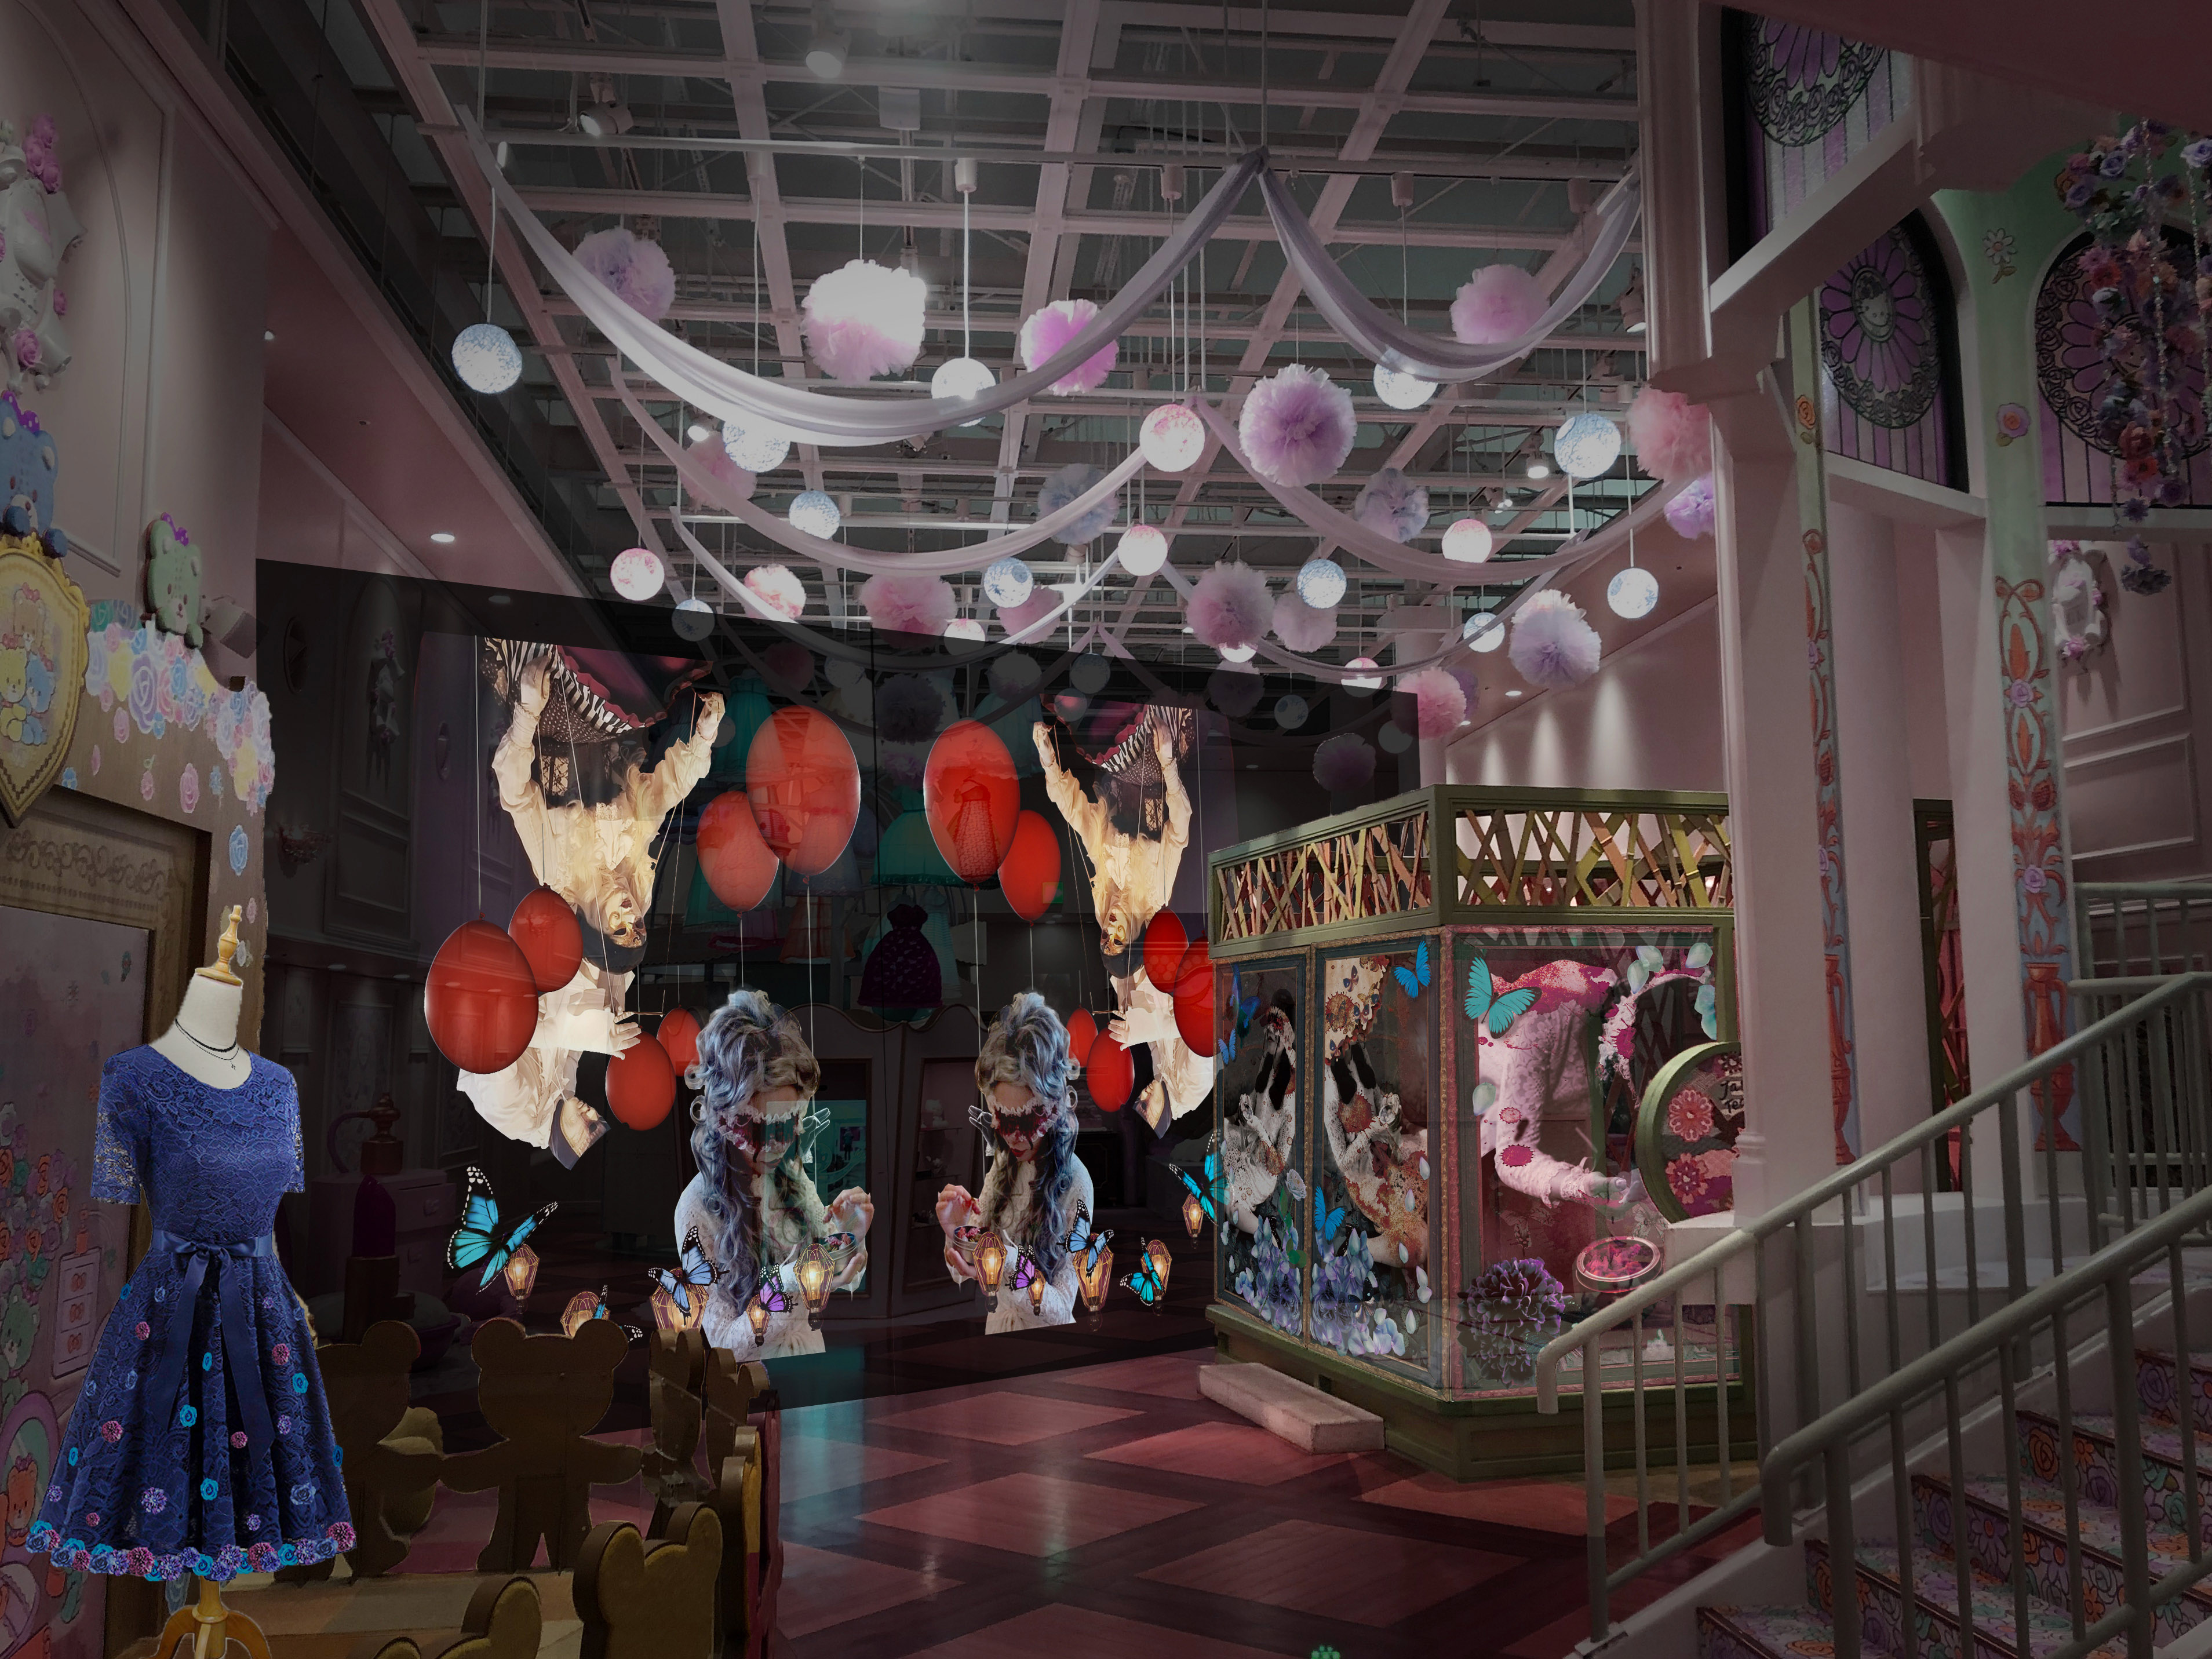 Witness Hello Kitty’s scary side at Hello Kitty Land Tokyo - Kawaii Masquerade - this Halloween - Alvinology